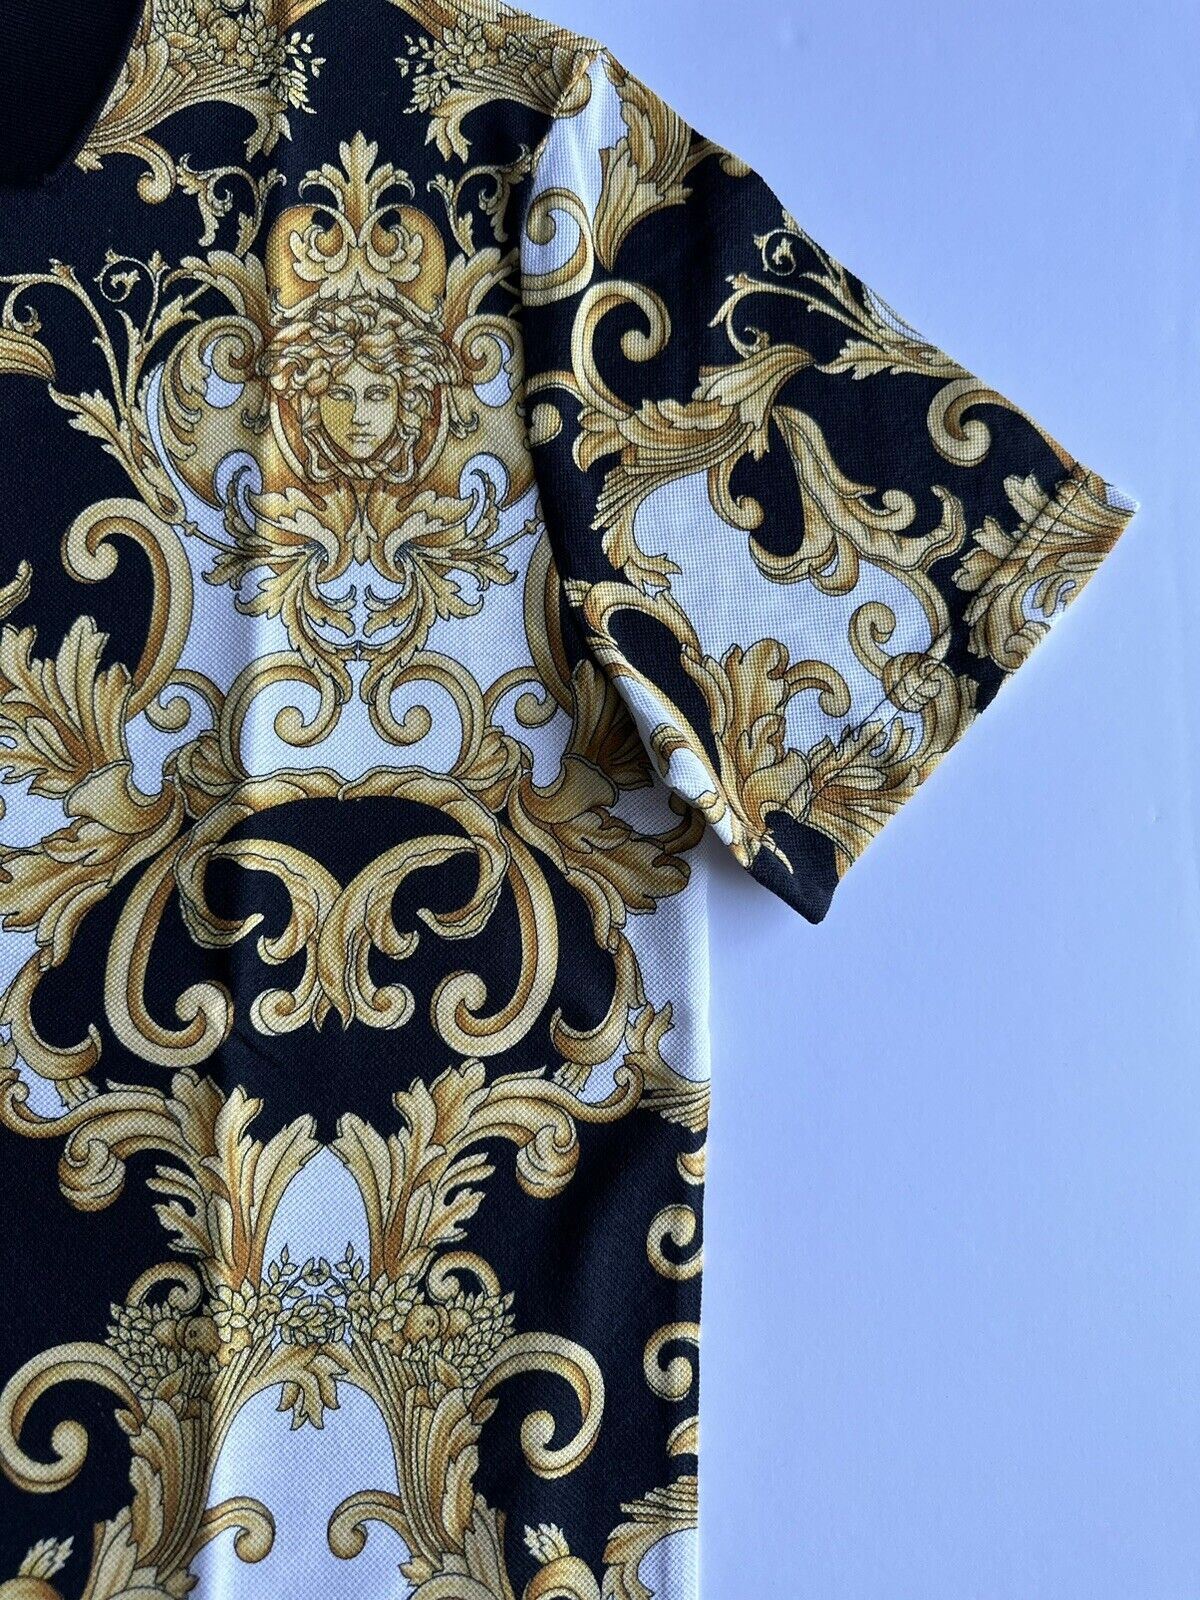 NWT 600 $ Versace Piquet Stoff Medusa Renaissance Poloshirt Medium 1008281